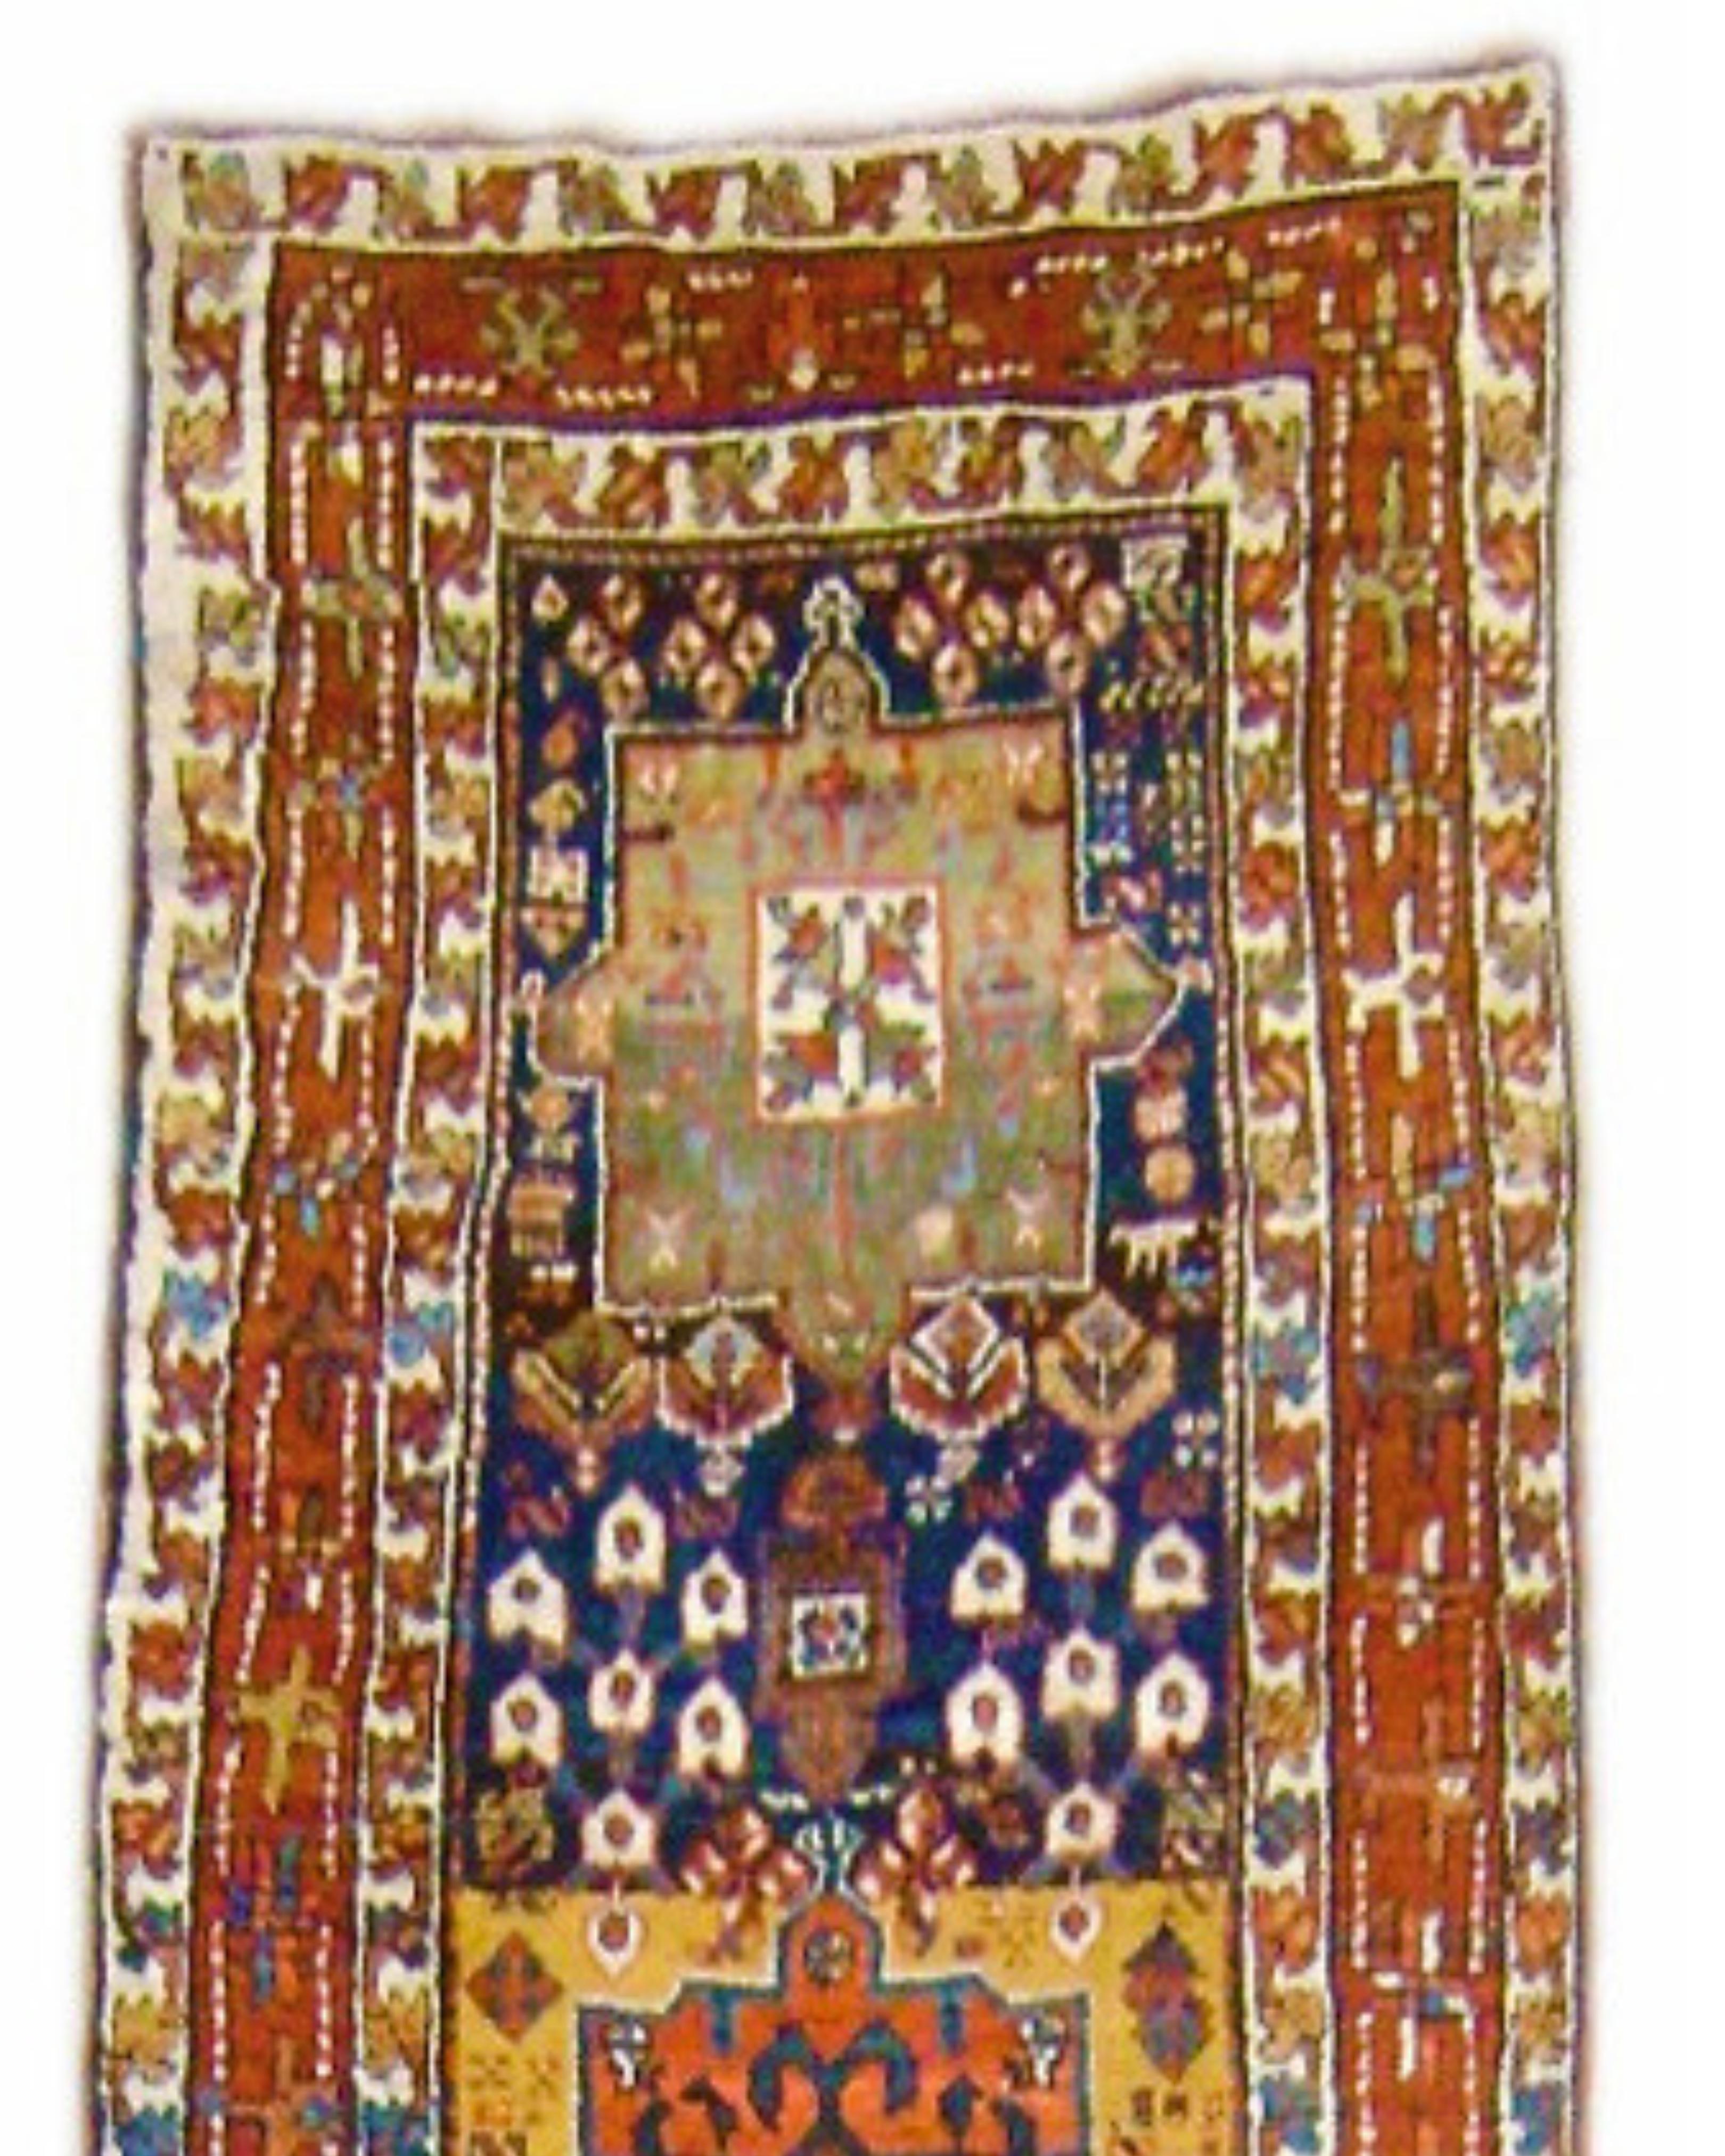 Ancien tapis persan Karadagh, 19e siècle

Informations supplémentaires :
Dimensions : 3'4